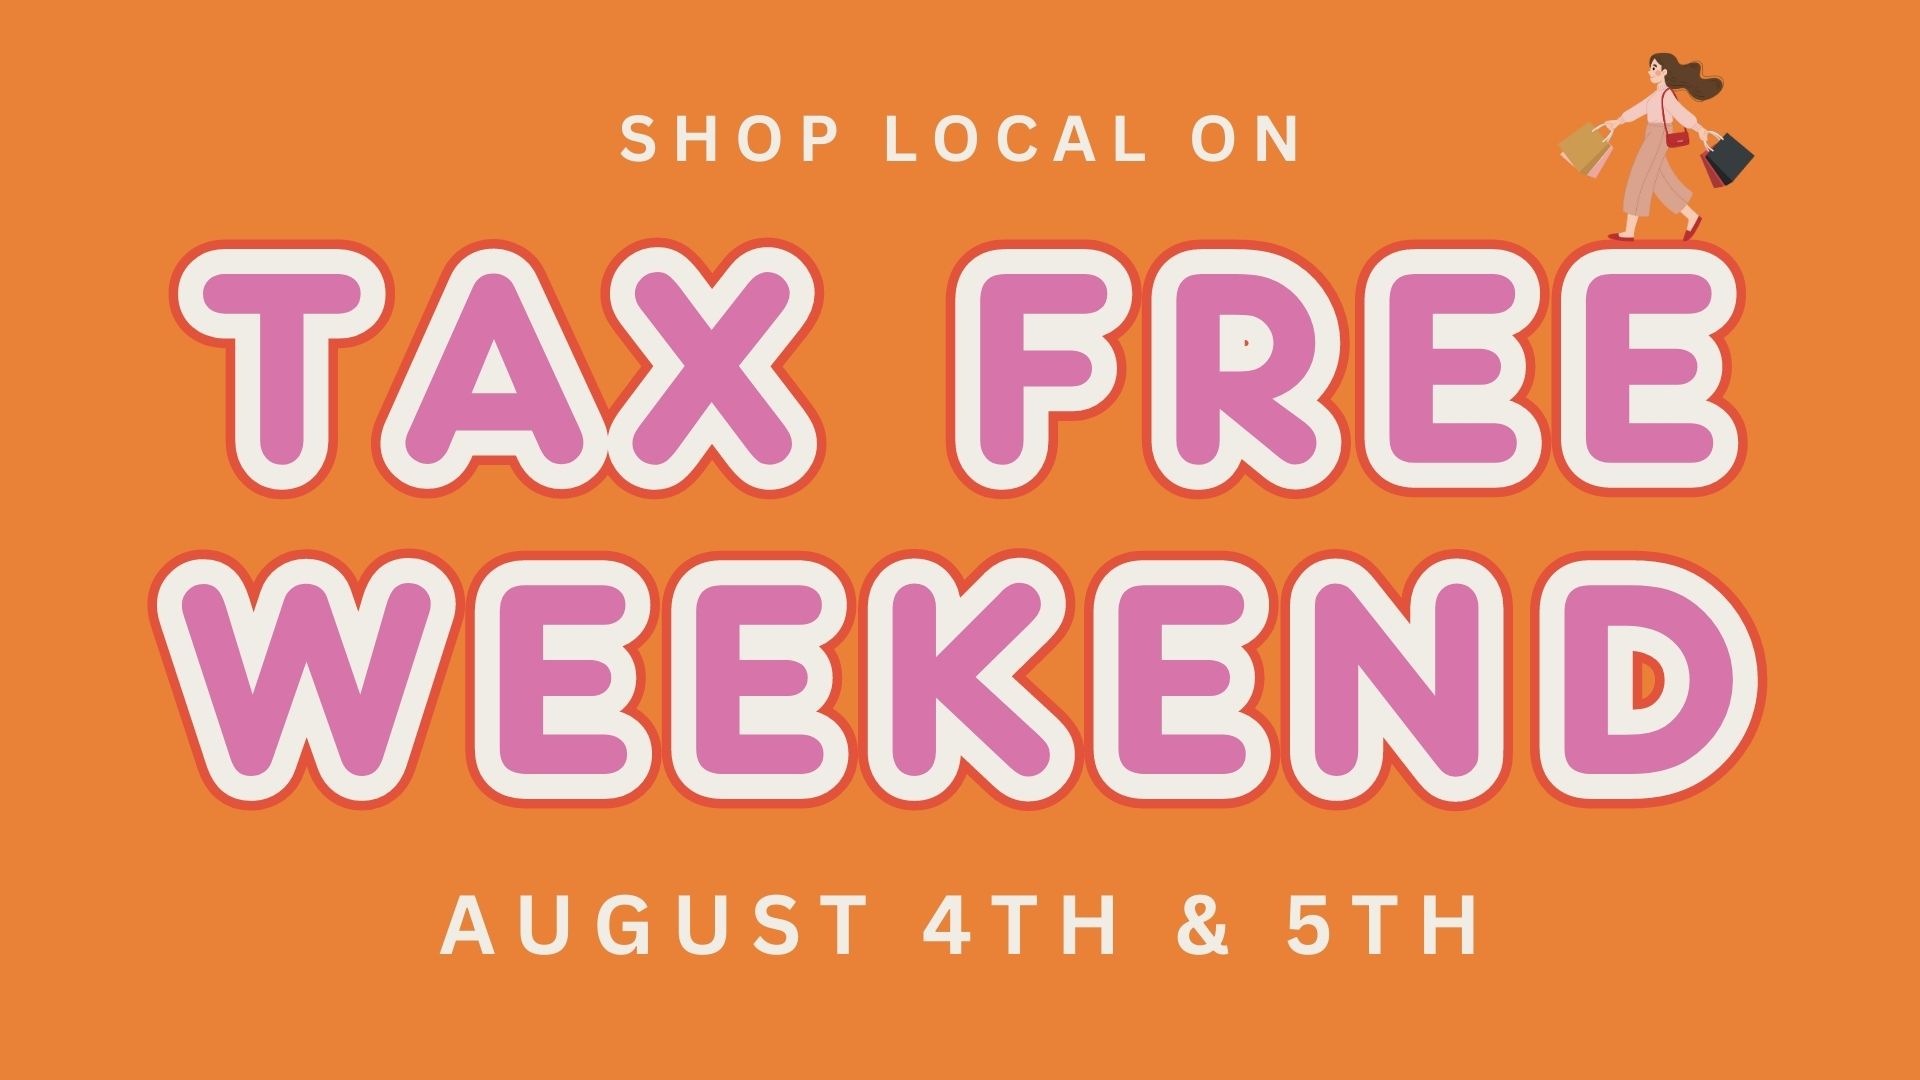 Tax Free Weekend promotion in Iowa